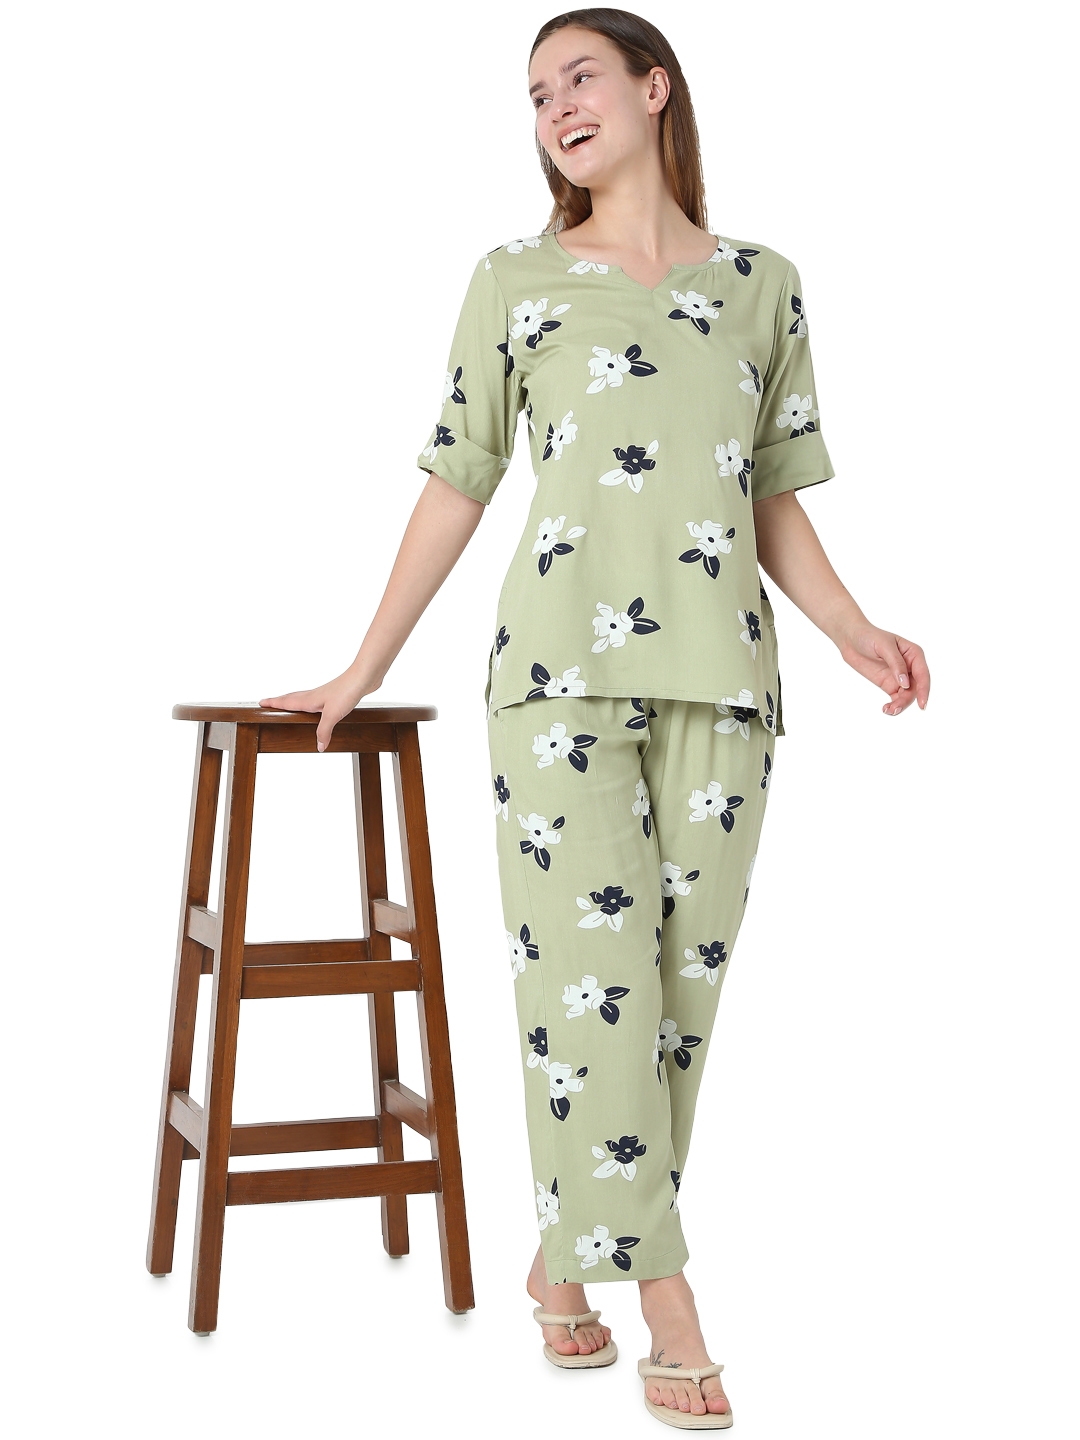 Smarty Pants | Smarty Pants women's cotton olive floral print night suit.  5